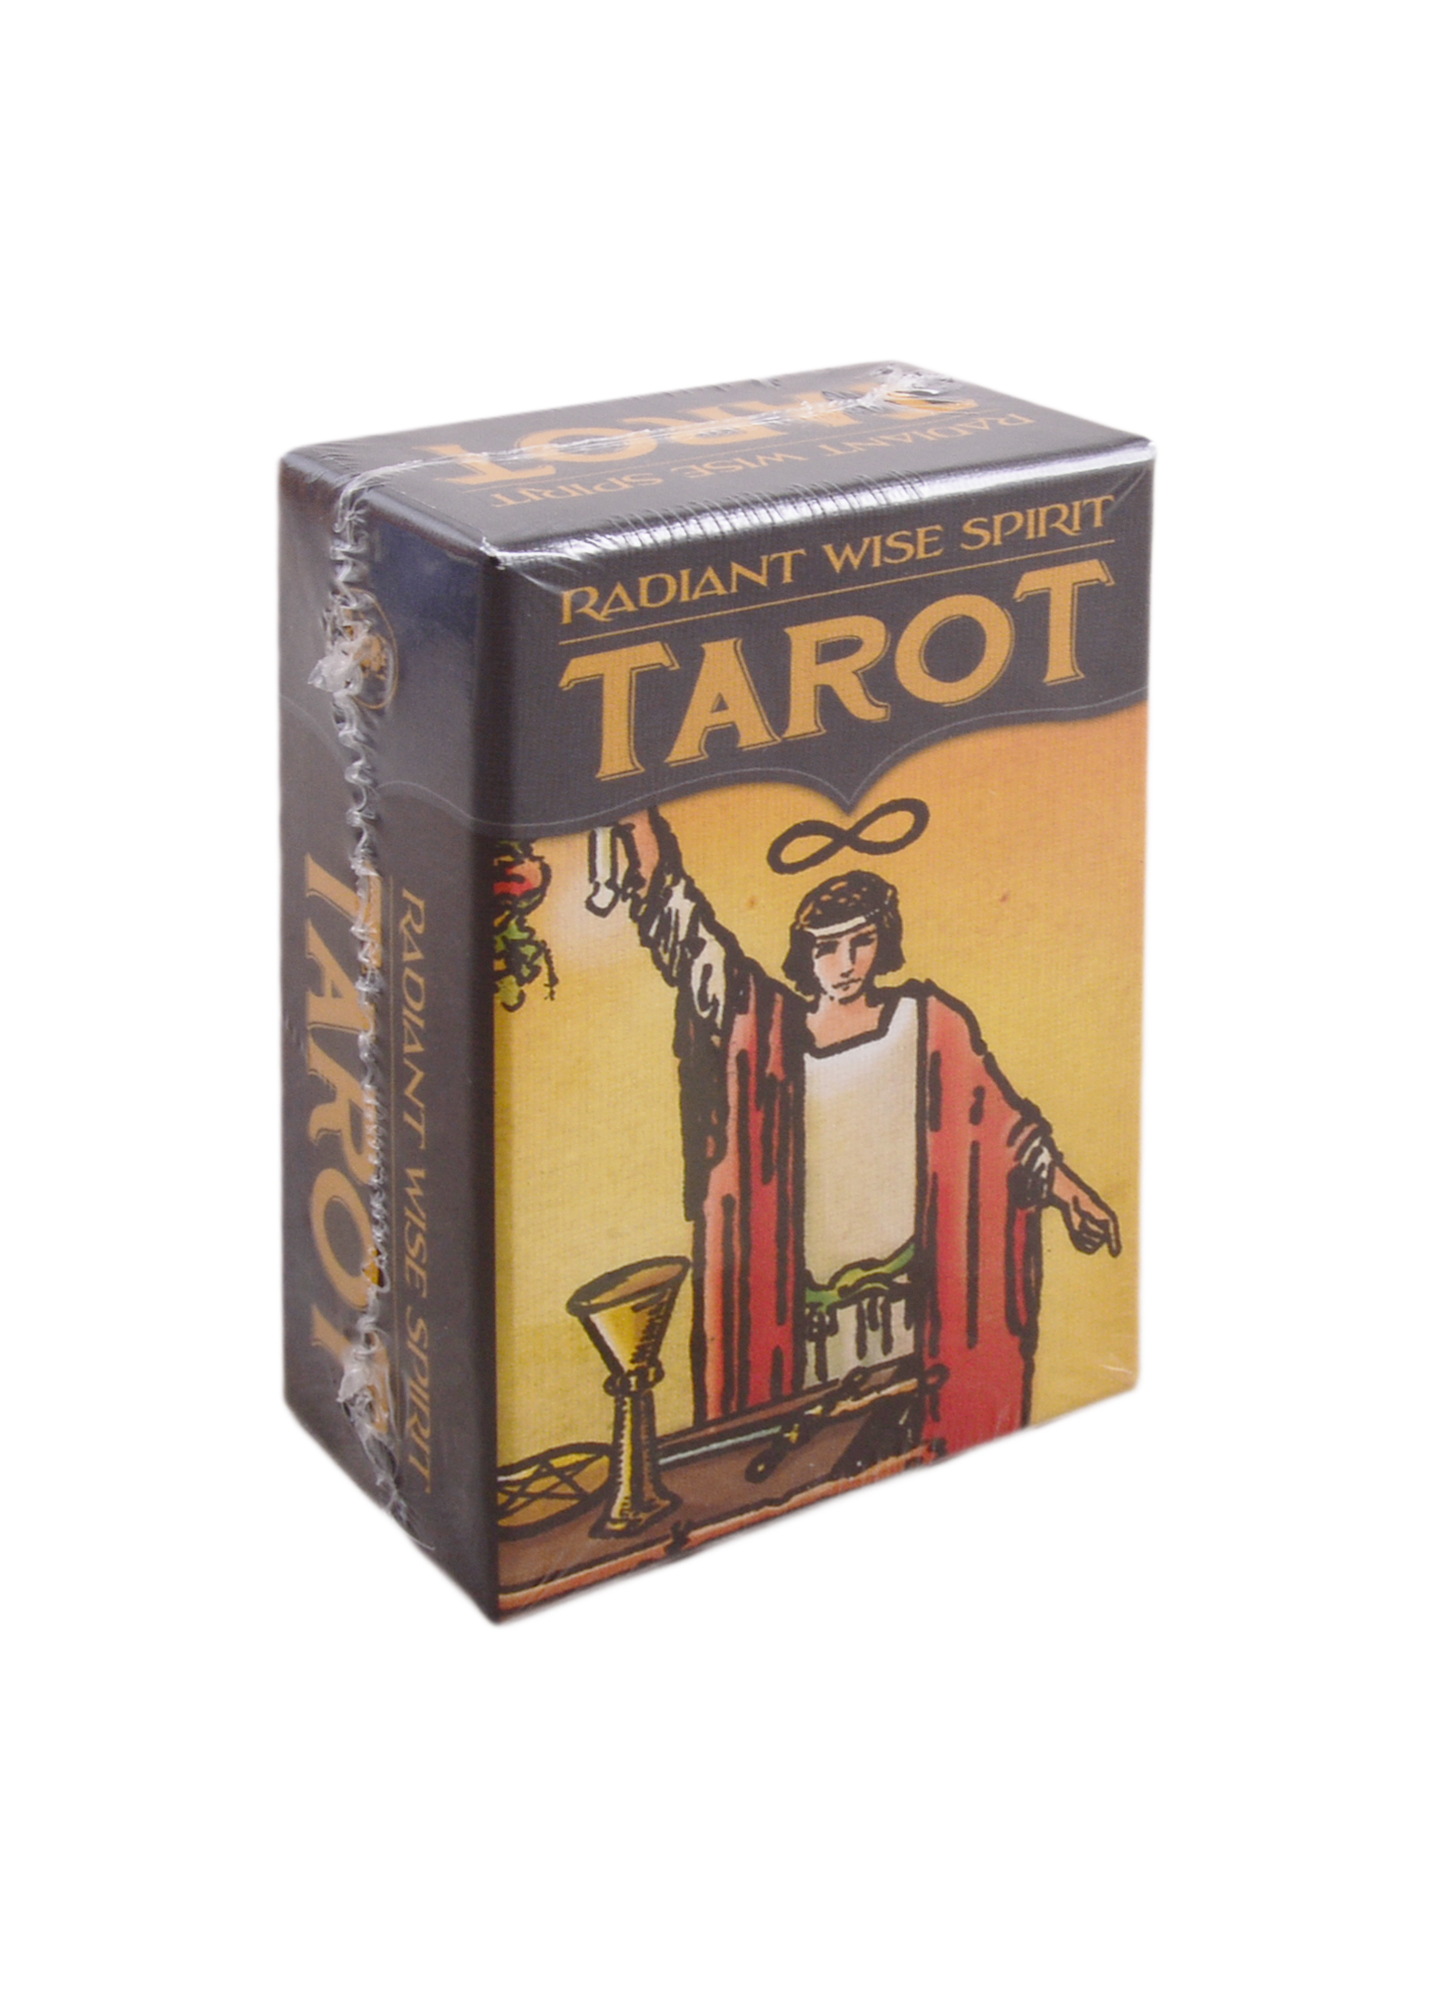 Radiant Wise Spirit Tarot cullinane mj wise dog tarot